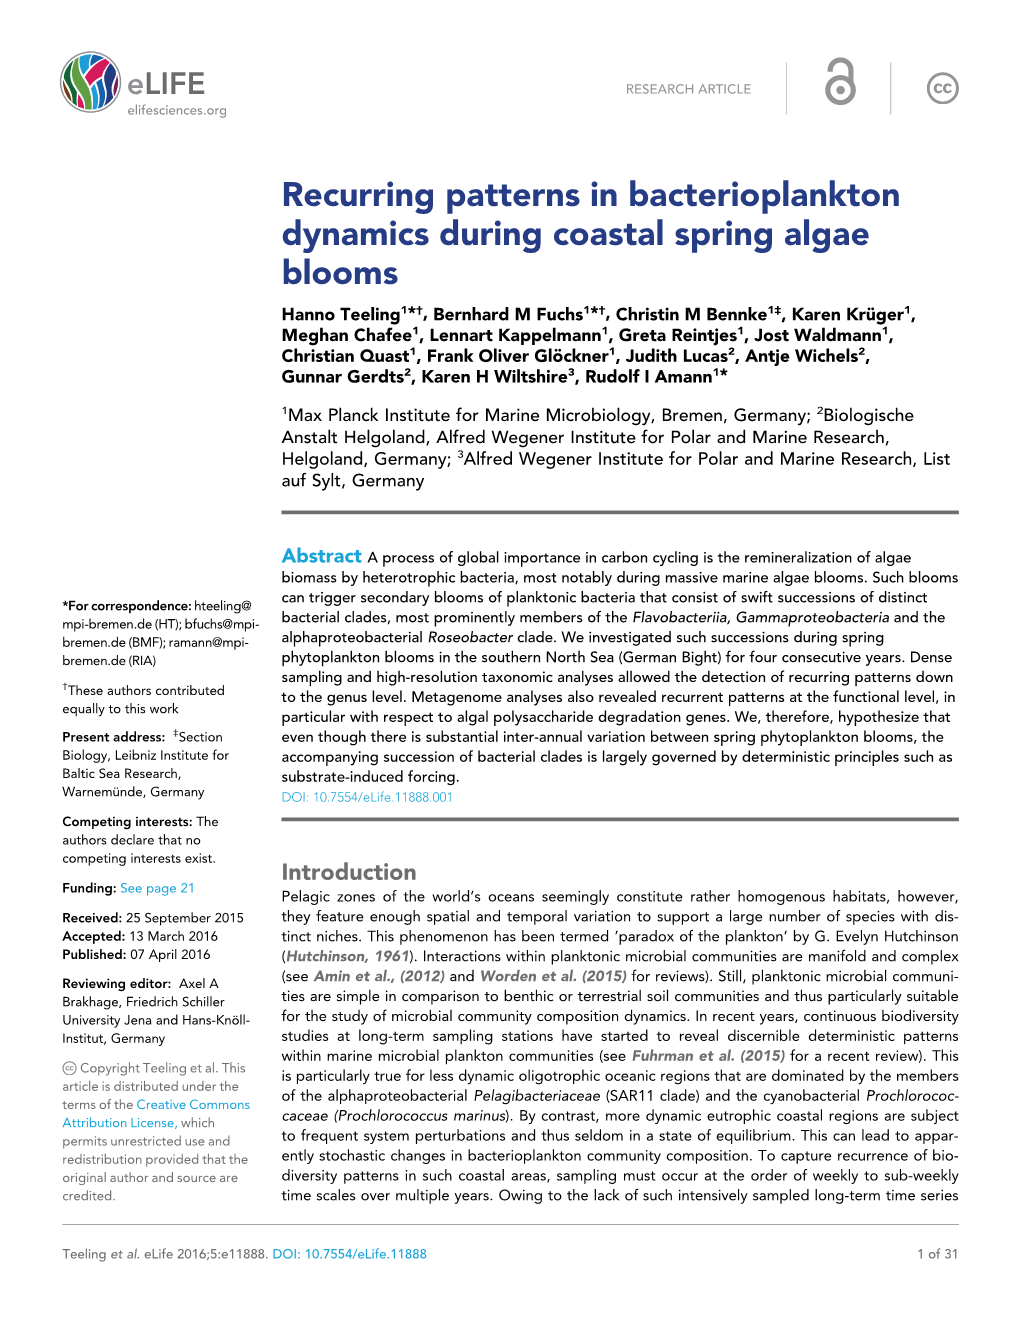 Recurring Patterns in Bacterioplankton Dynamics During Coastal Spring